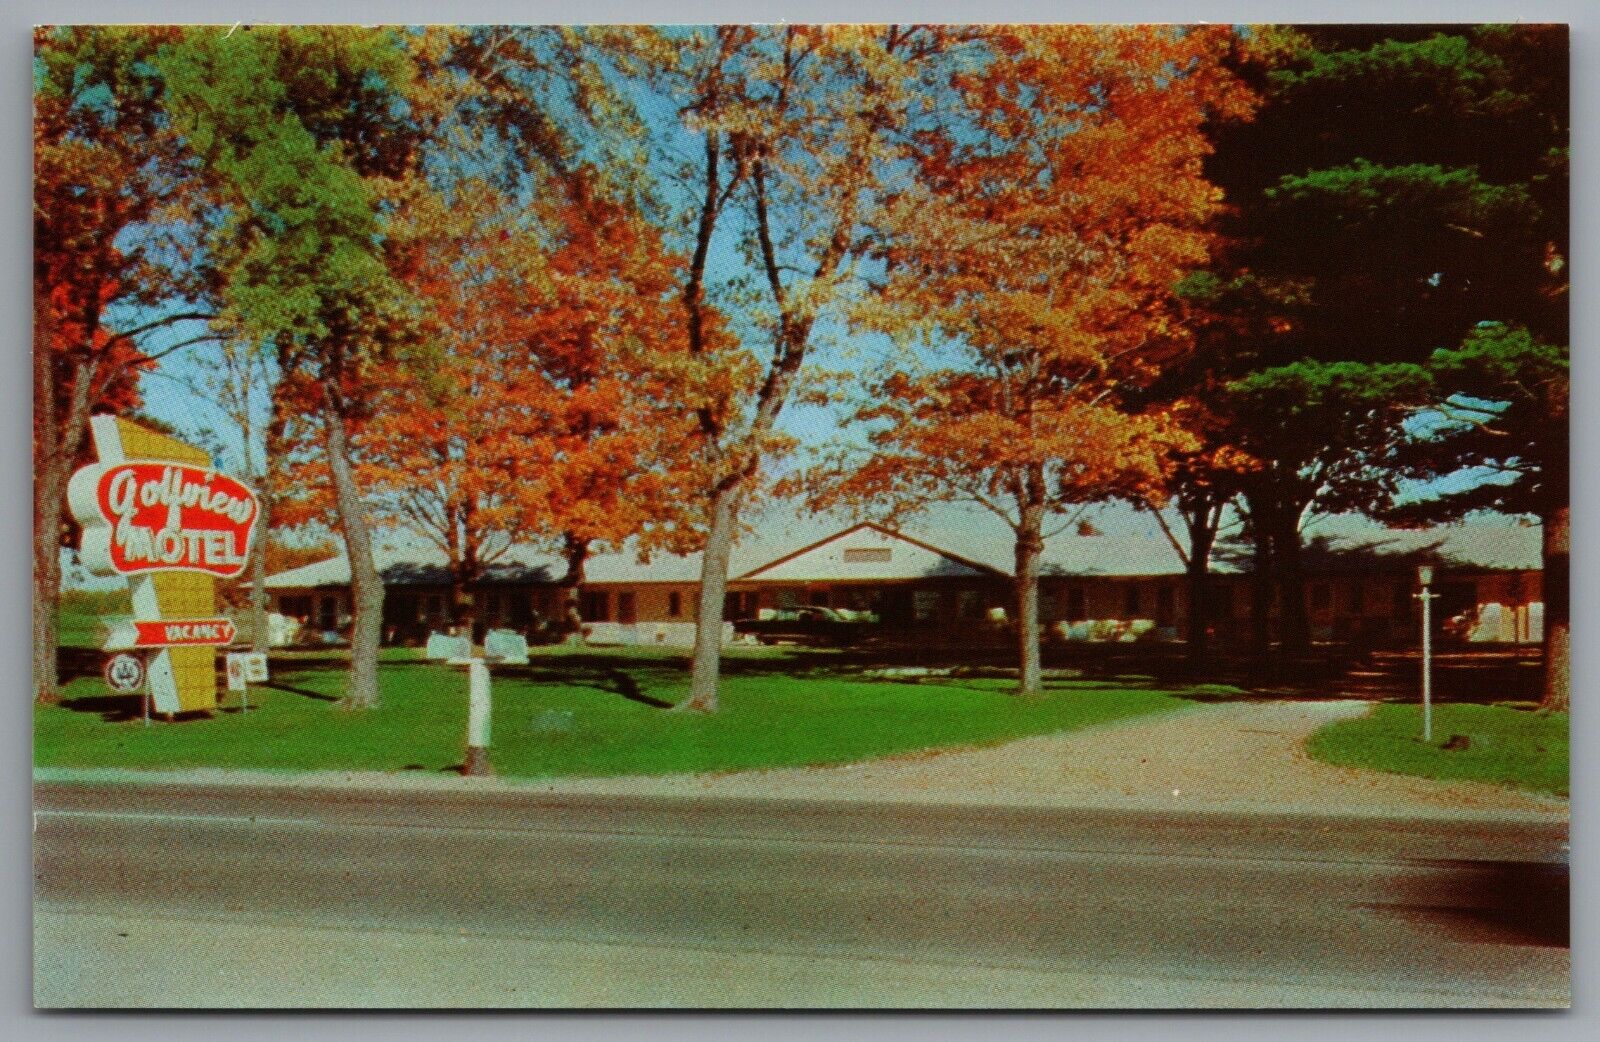 Gaylord MI Golfview Motel c1958 US Hwy 27 Roadside Autumn View Postcard